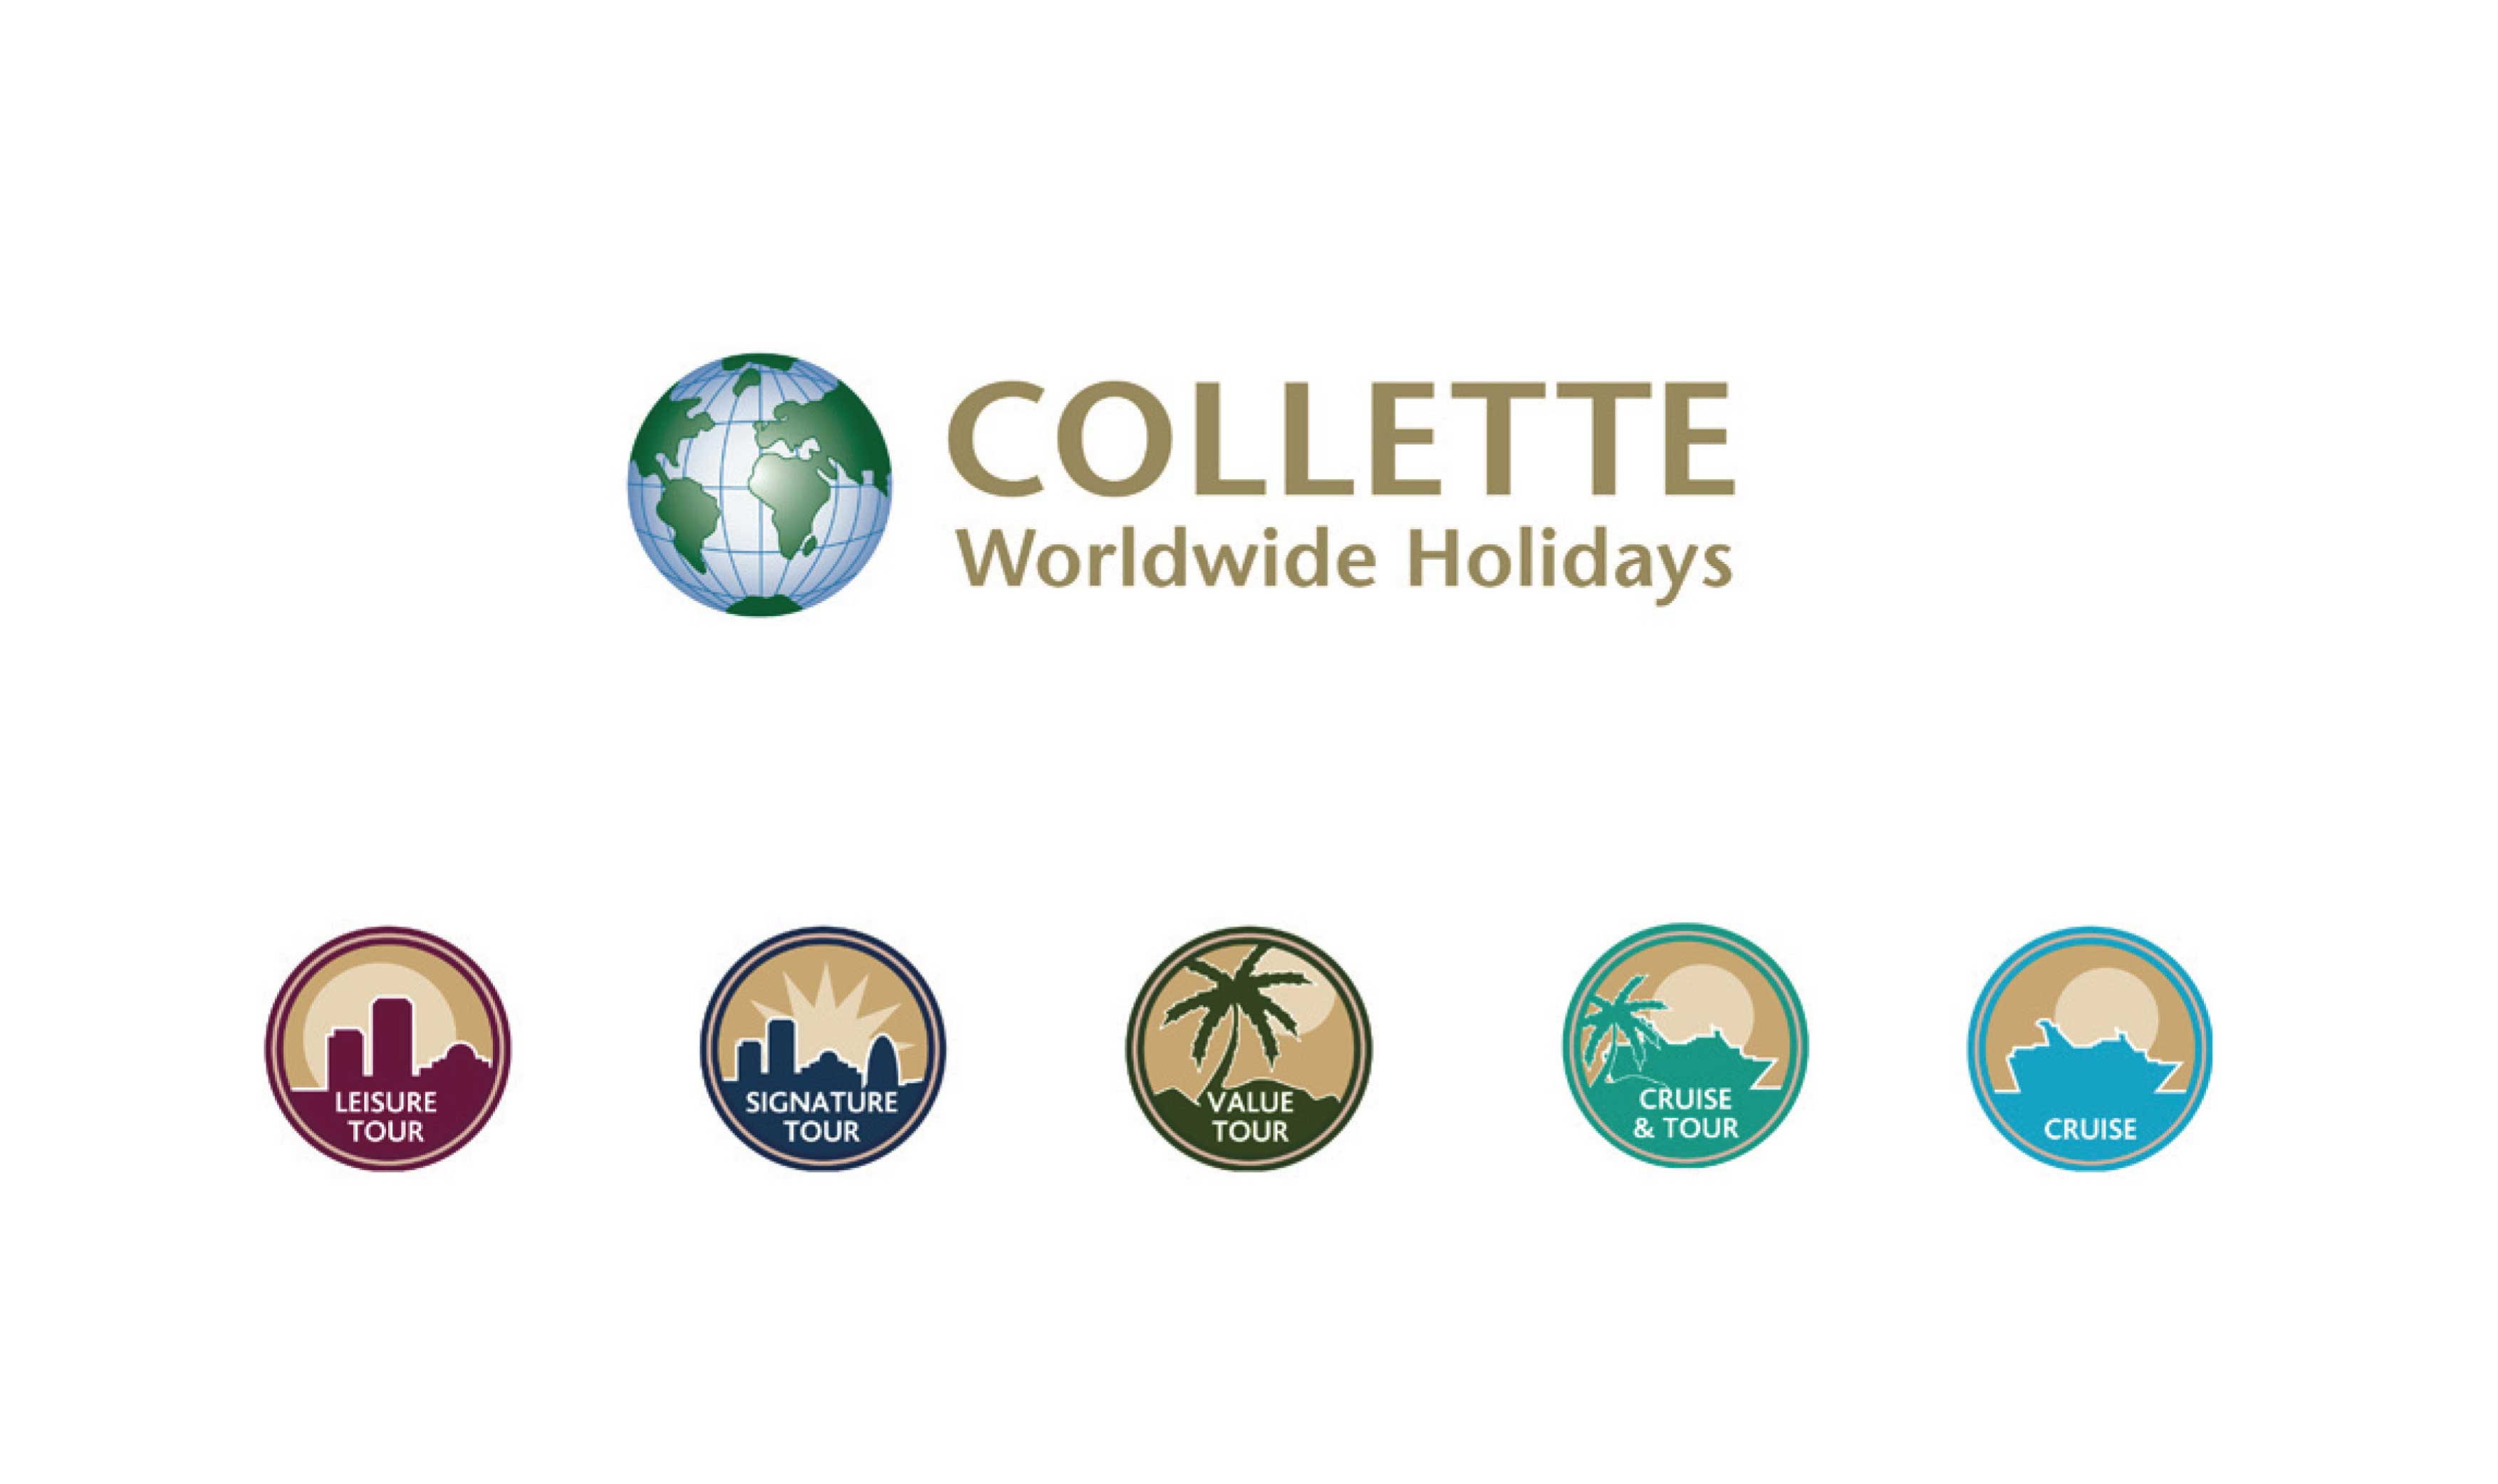 Collette Worldwide Holidays